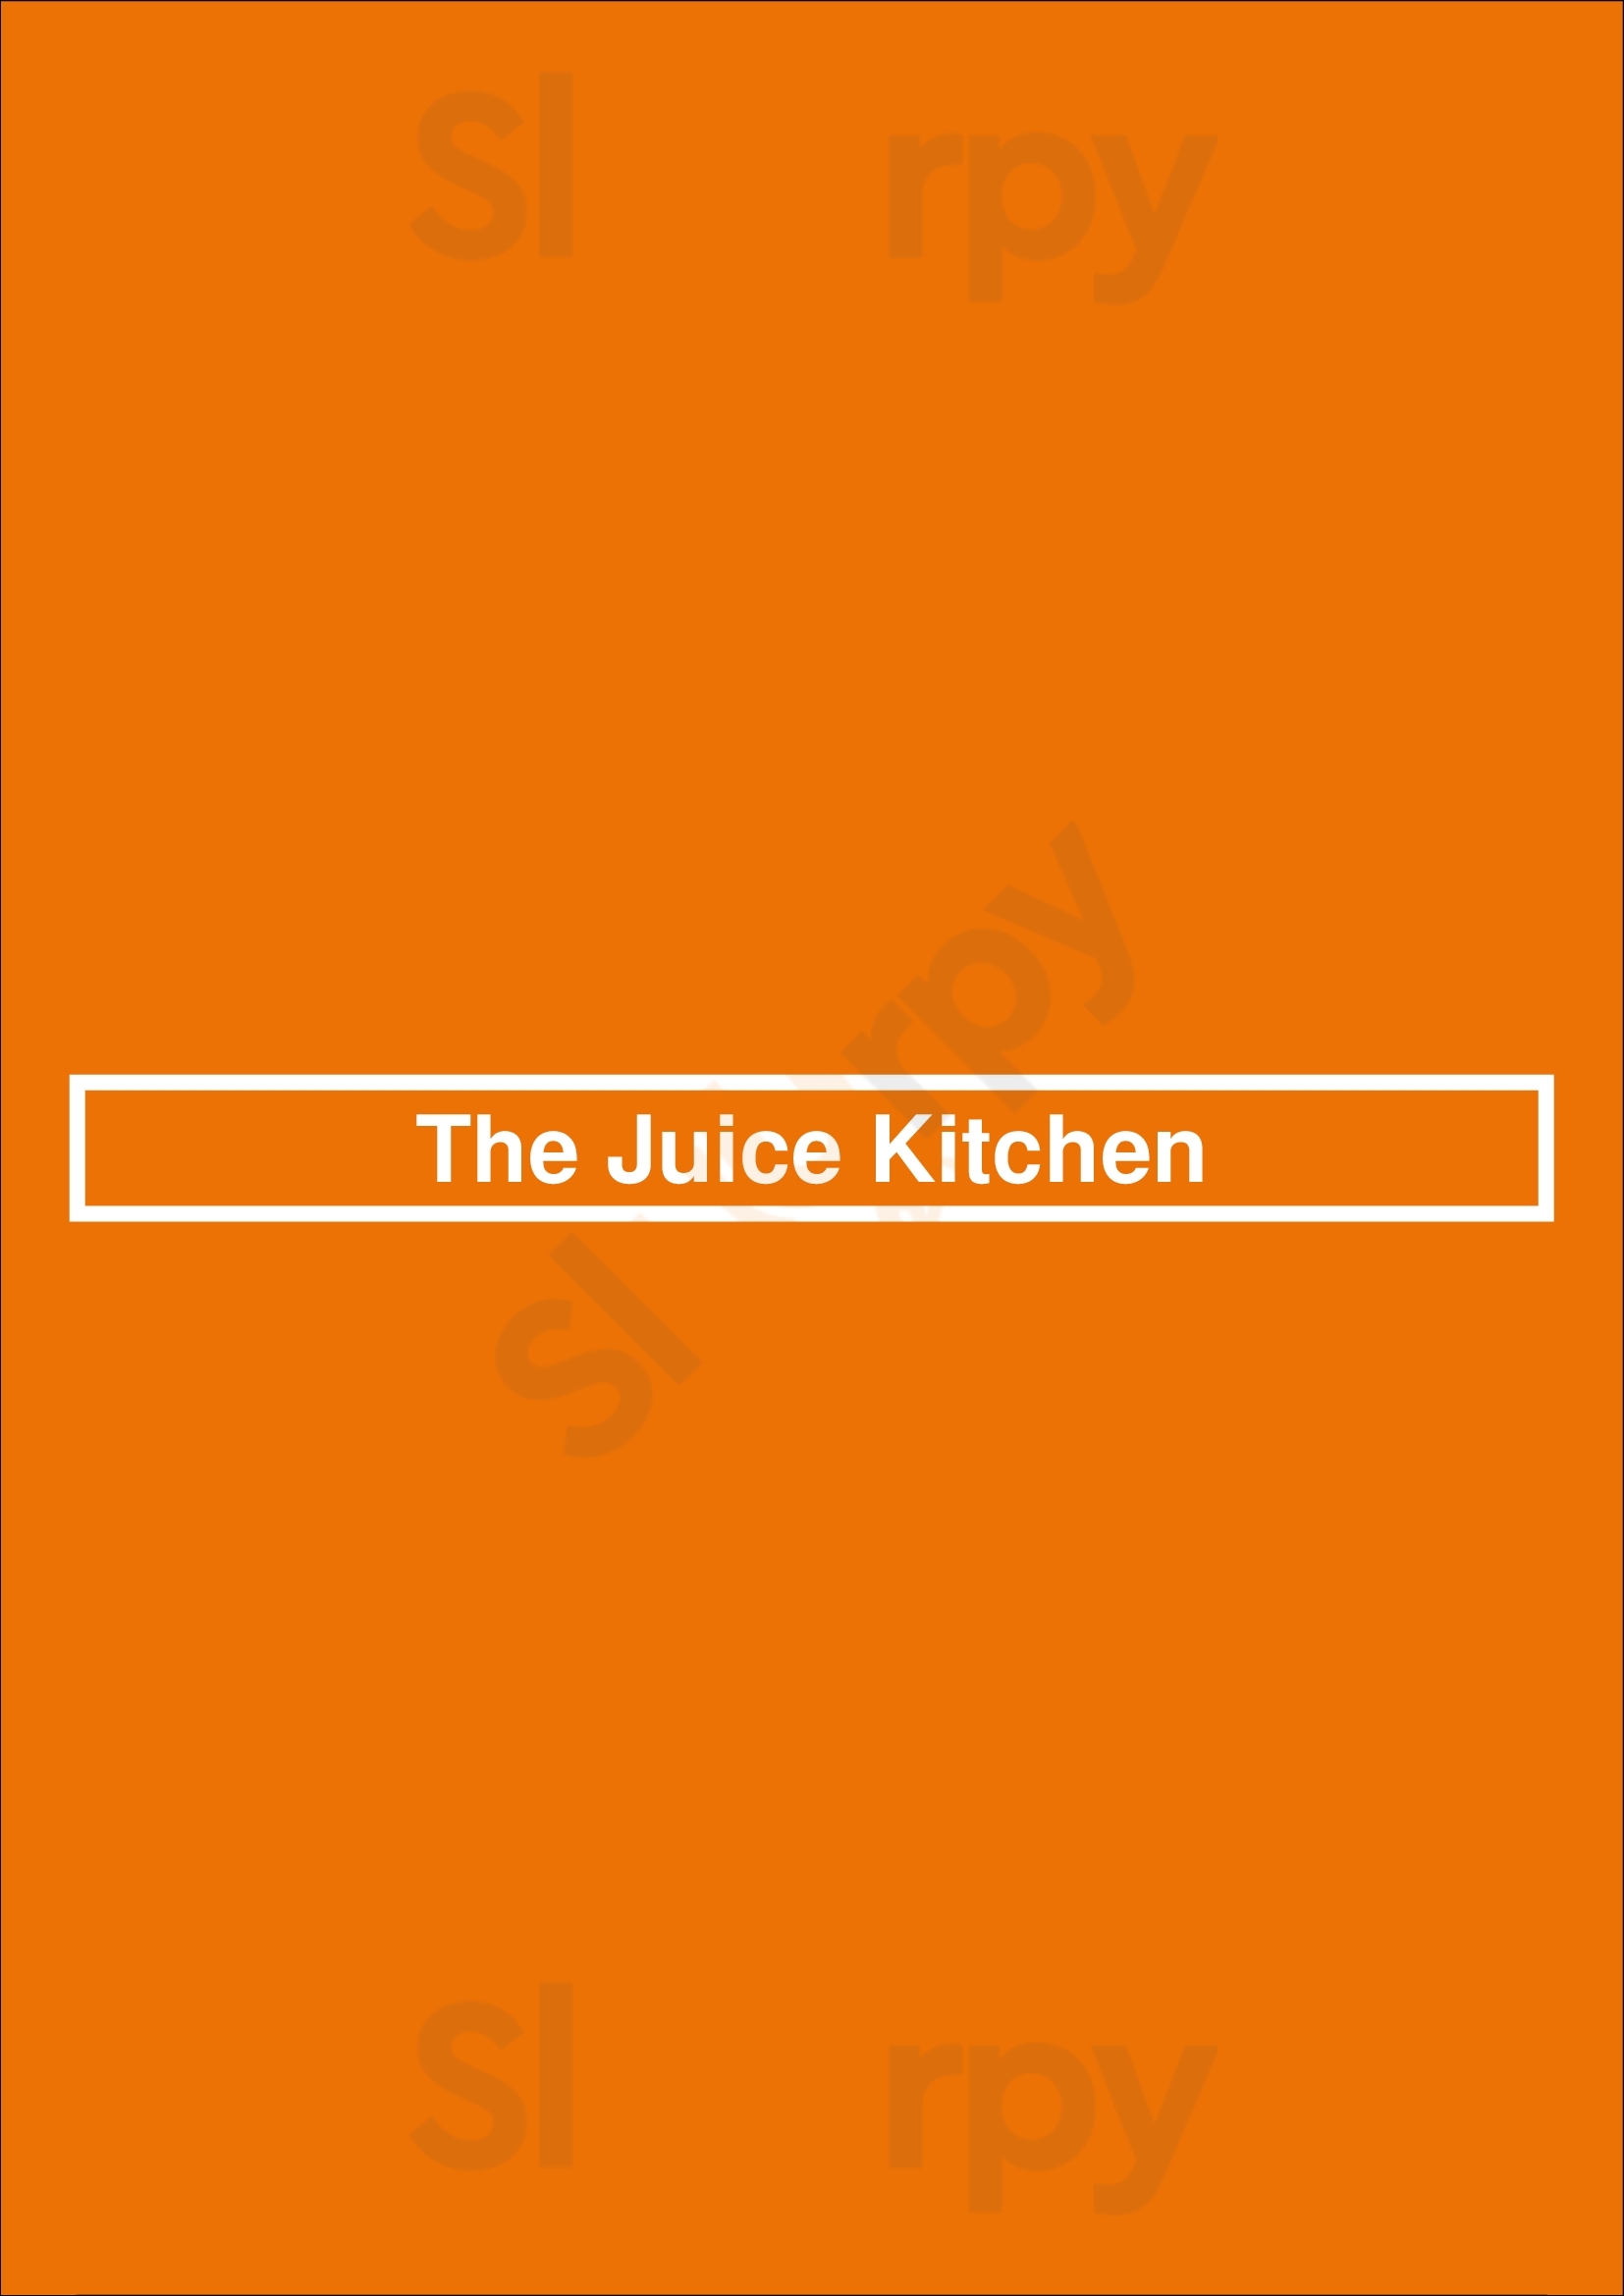 The Juice Kitchen Hamilton Menu - 1